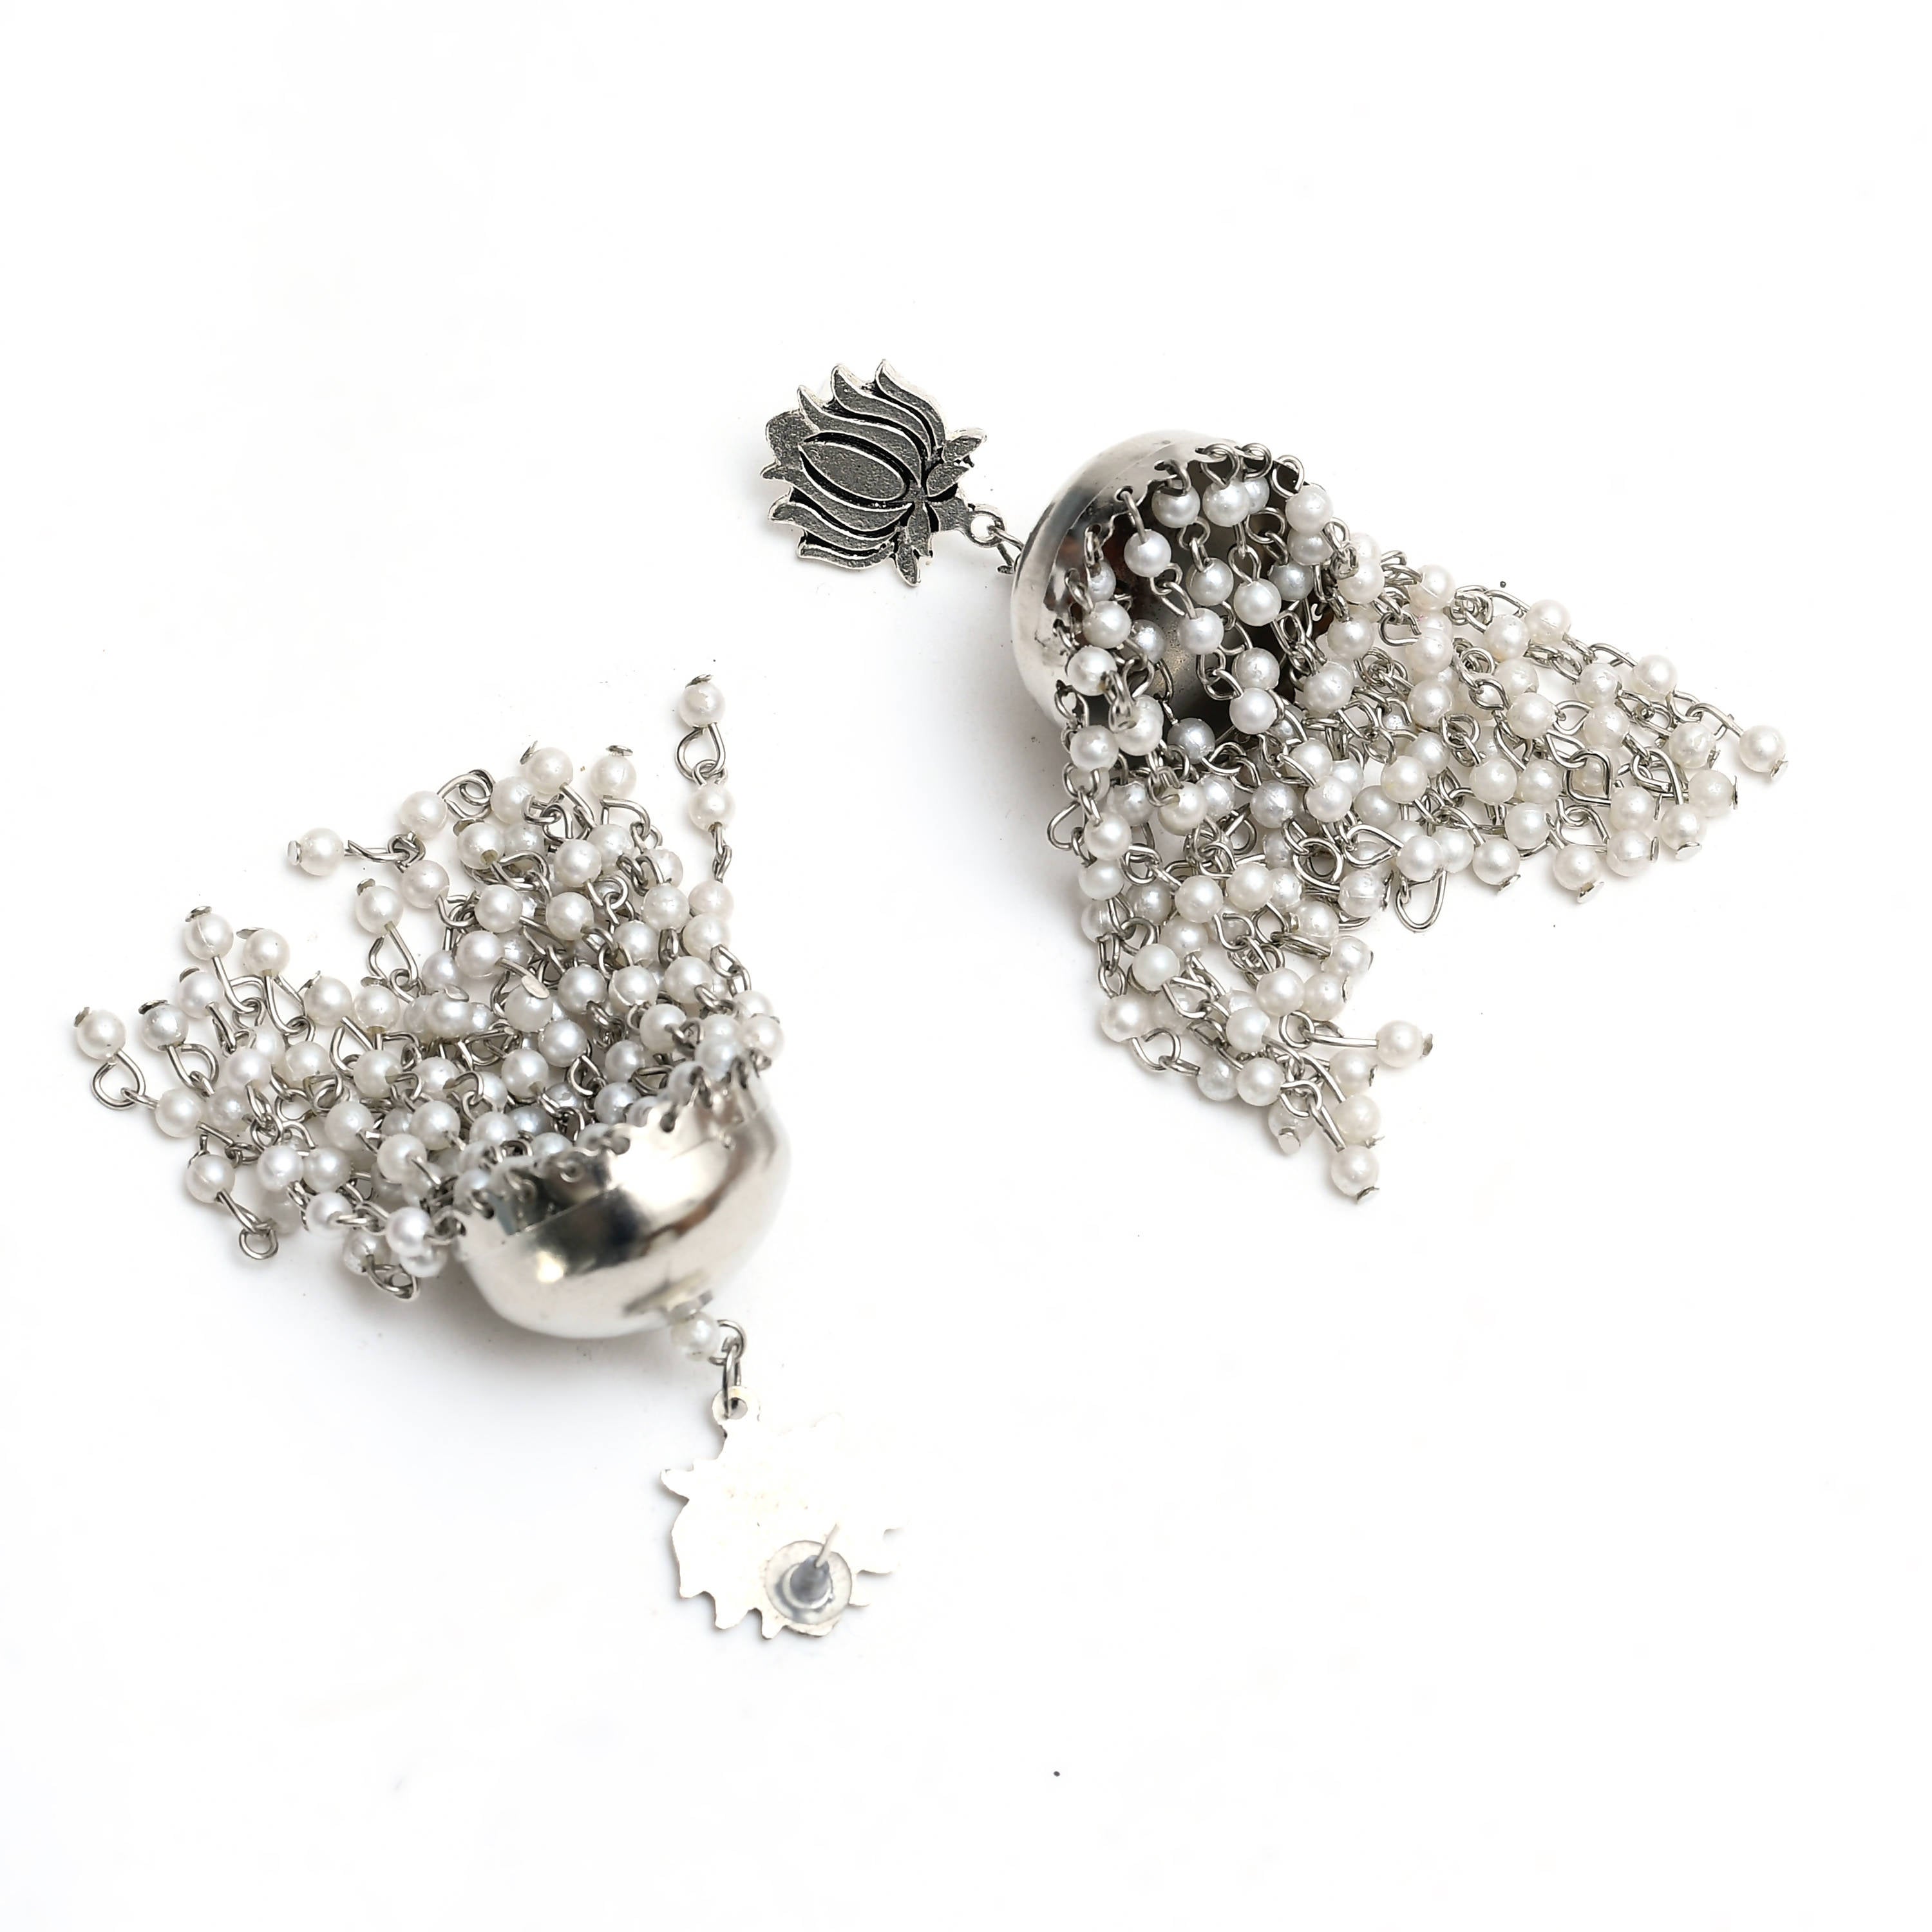 Johar Kamal Silver-Plated Lotus design Earrings with Pearls Jhumkas Jker_077